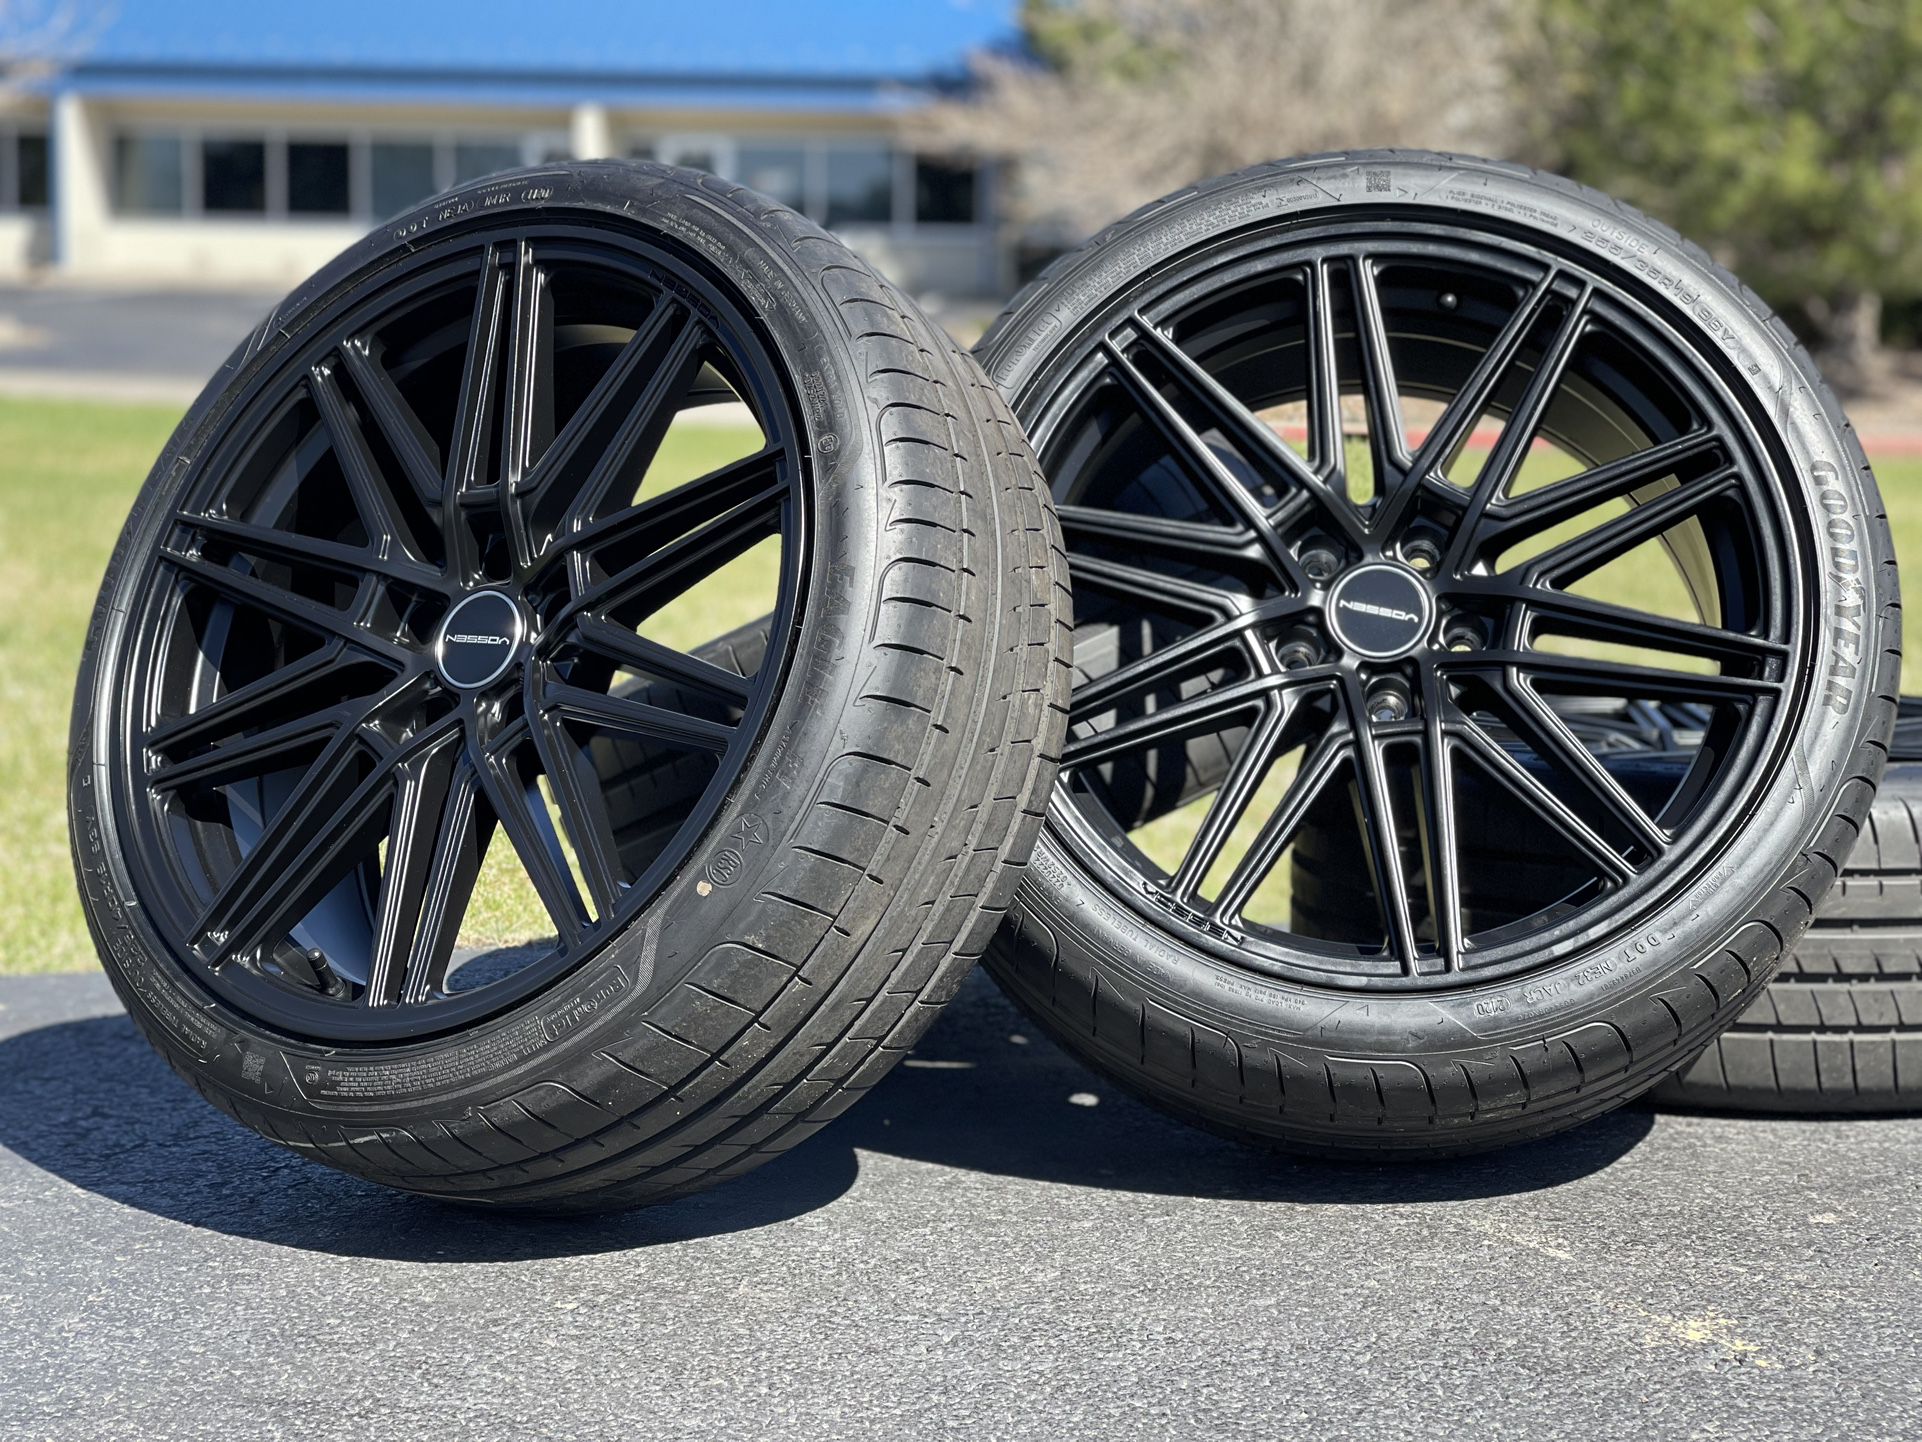 NEW 19” Vossen Wheels 5x114.3 rims Goodyear Tires Tesla Genesis Acura Kia Infinity Mustang